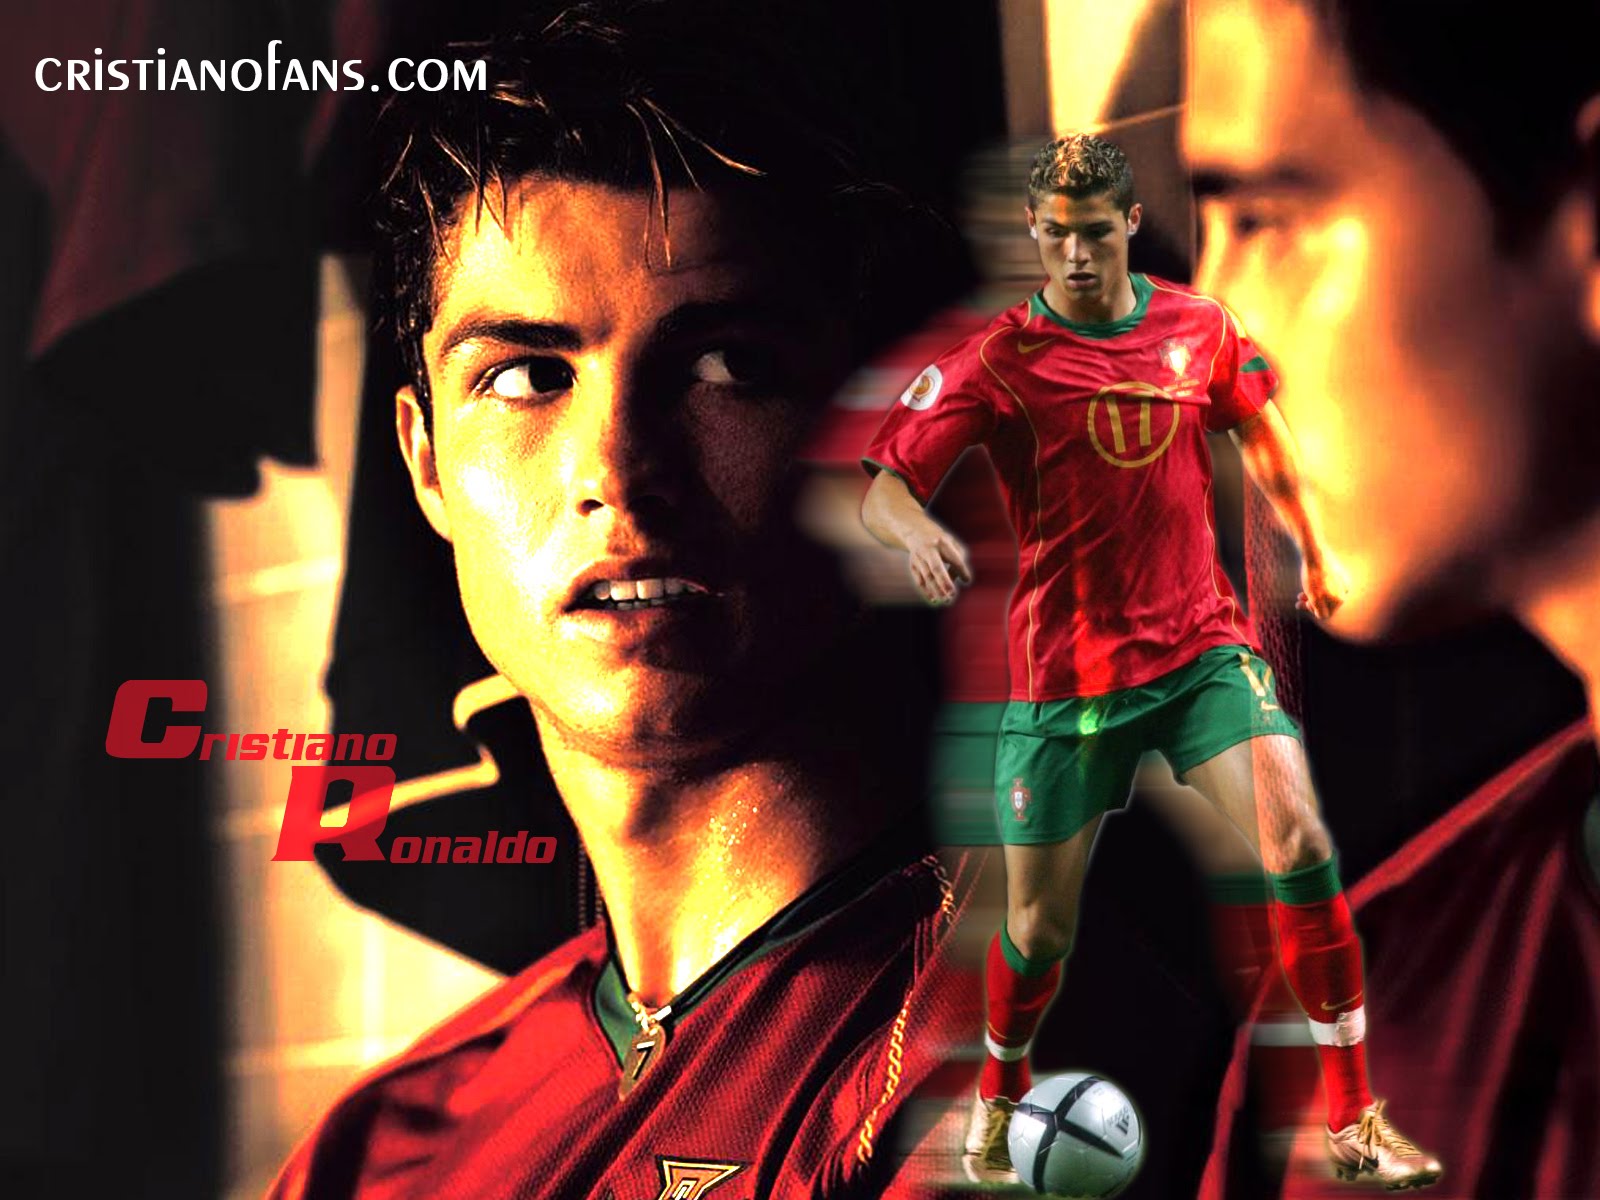 http://2.bp.blogspot.com/_5cS02wmbQC0/TA_A9JW0HII/AAAAAAAAAAU/7qOtJ58LR70/s1600/Cristiano-Ronaldo-Wallpaper-015.jpg